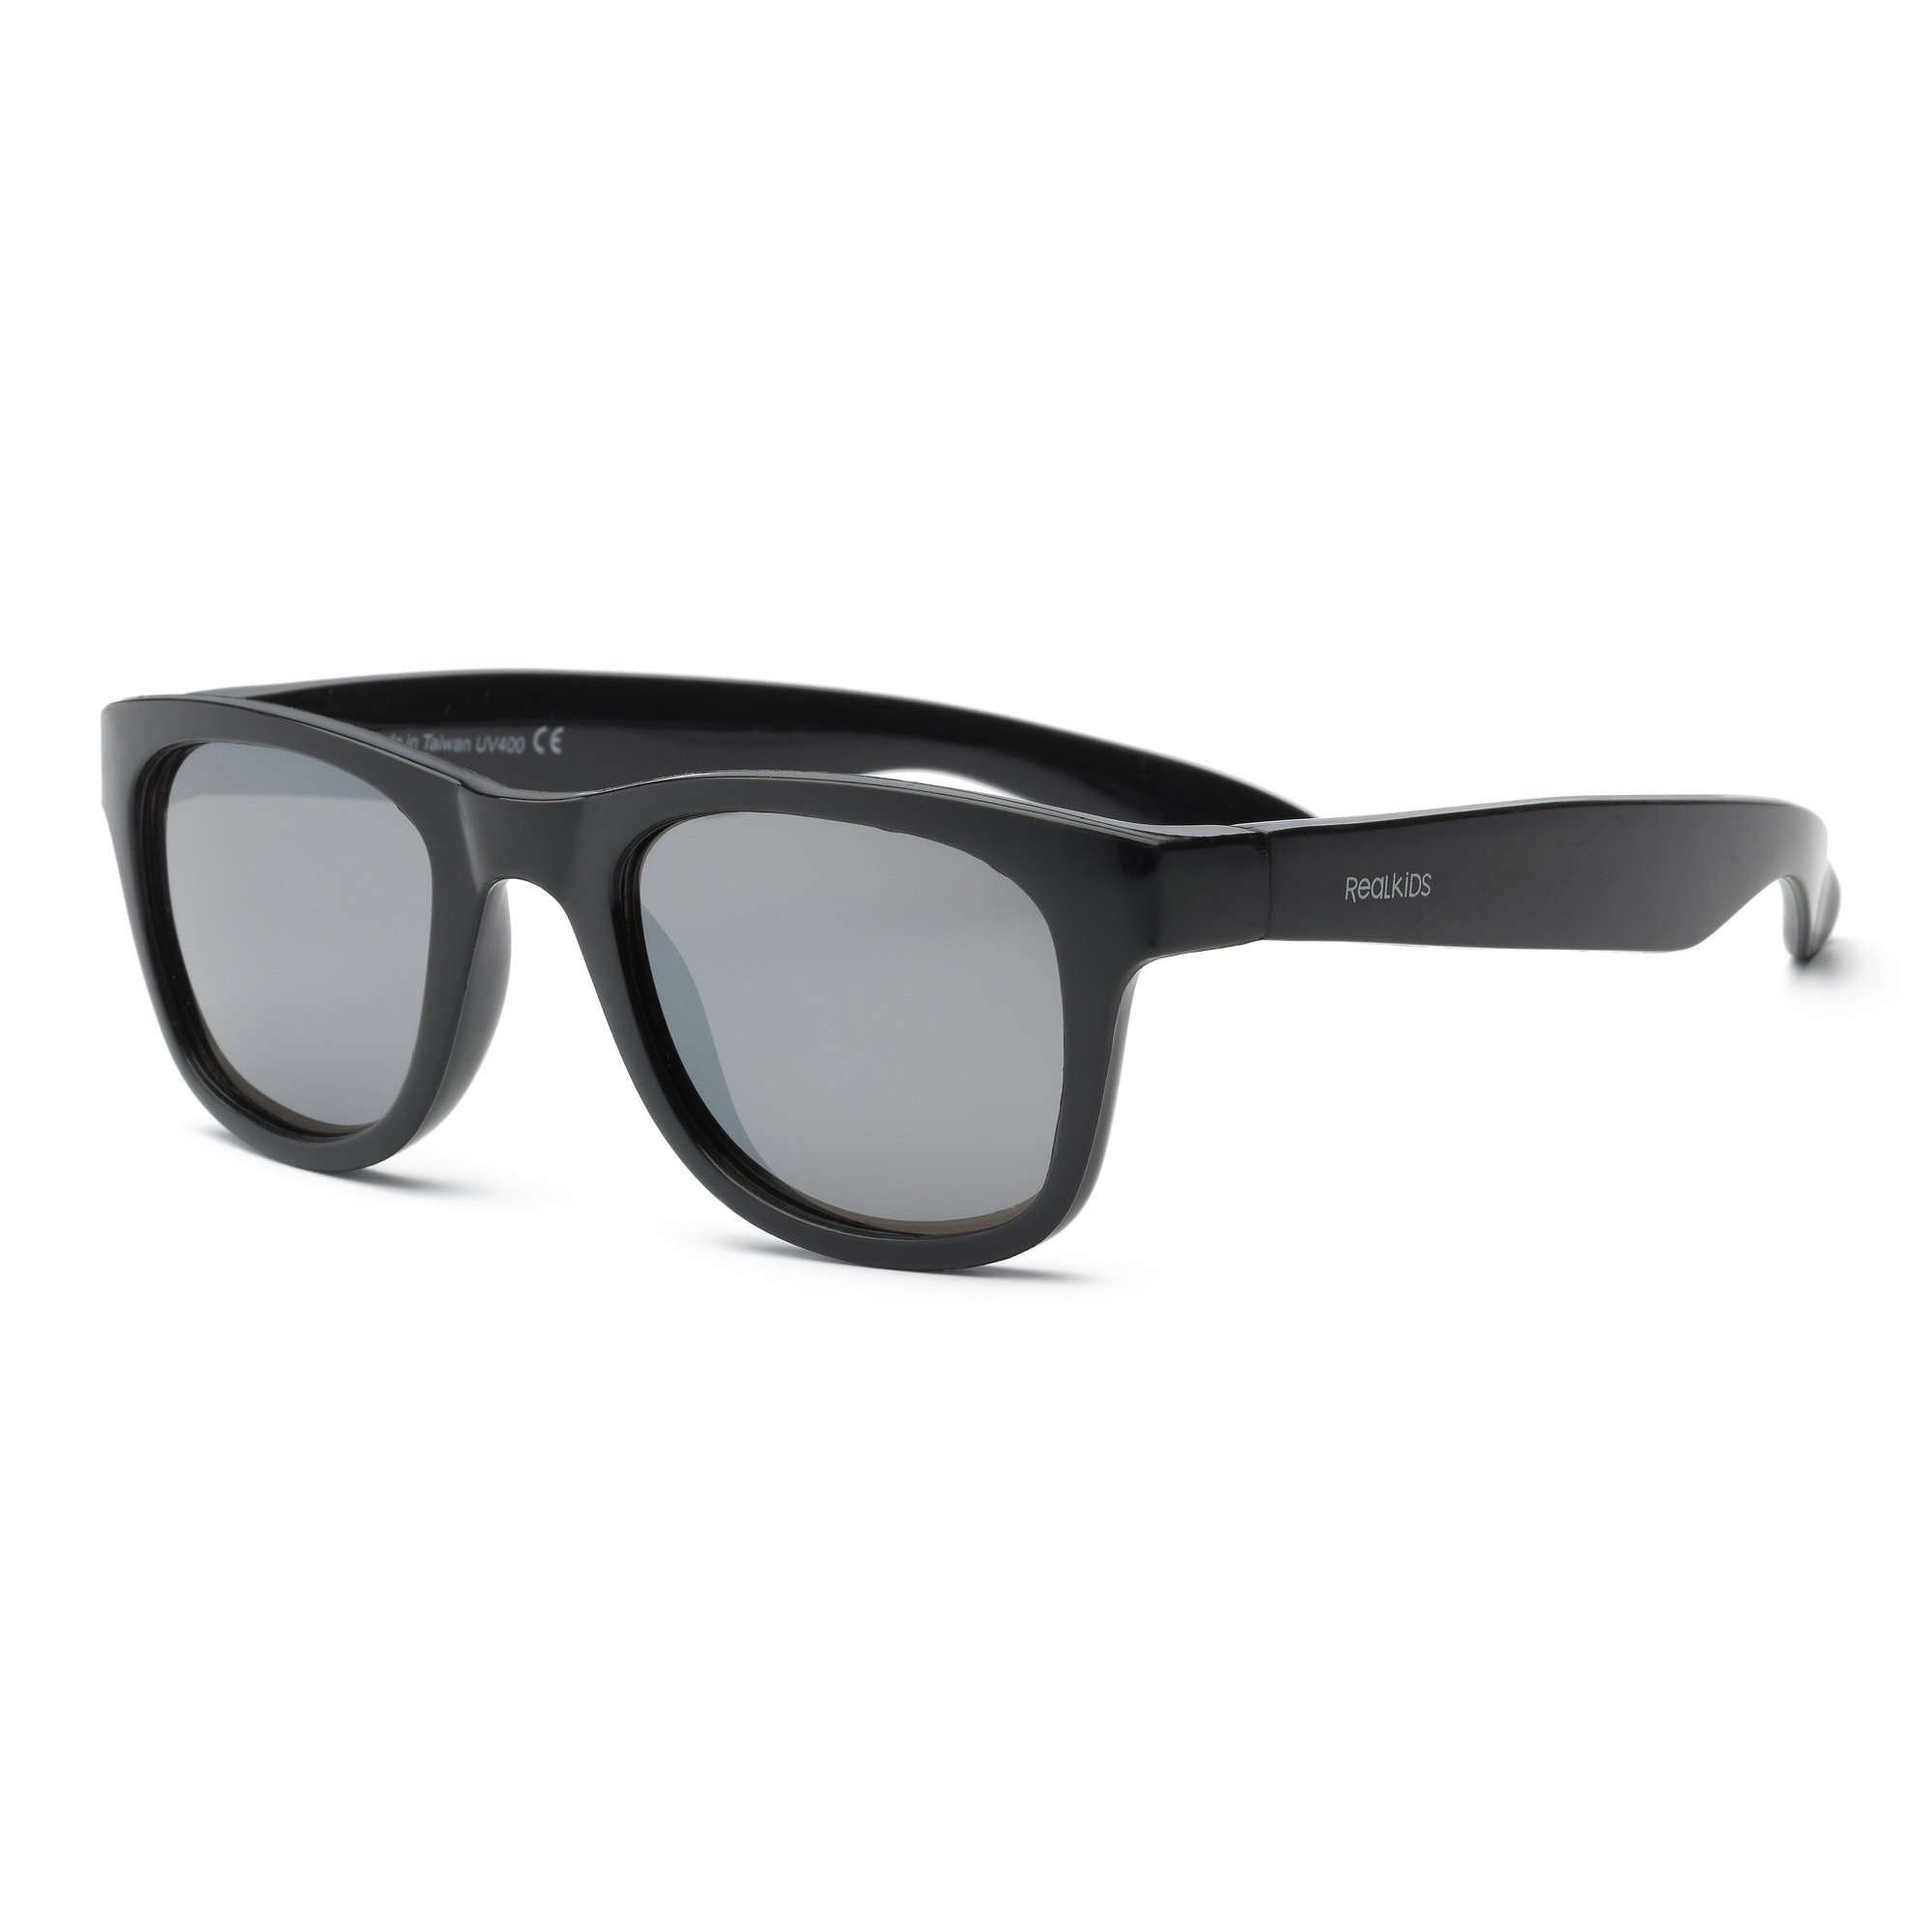 Surf Sunglasses Black Wayfarer